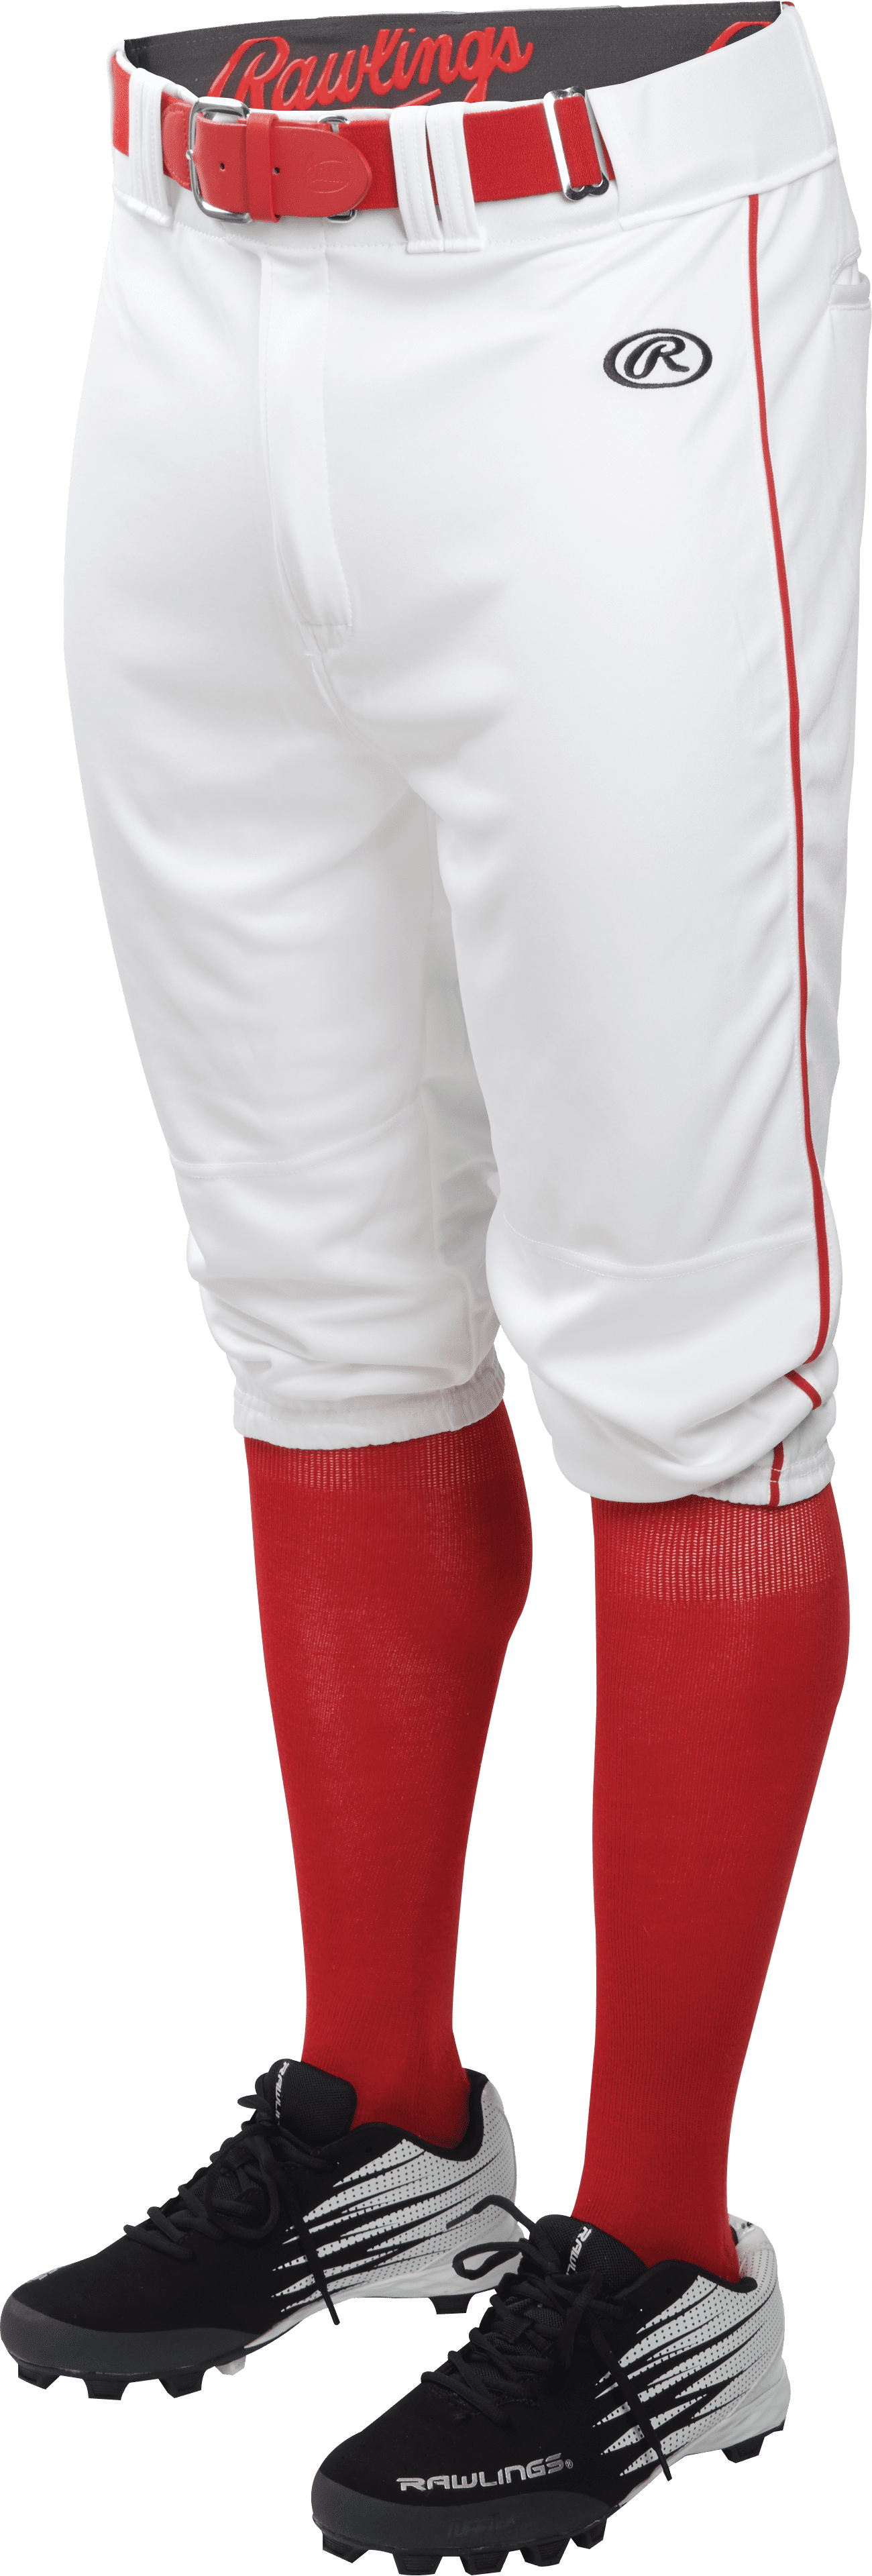 Rawlings Men/'s Launch Knicker Piped Baseball Pant